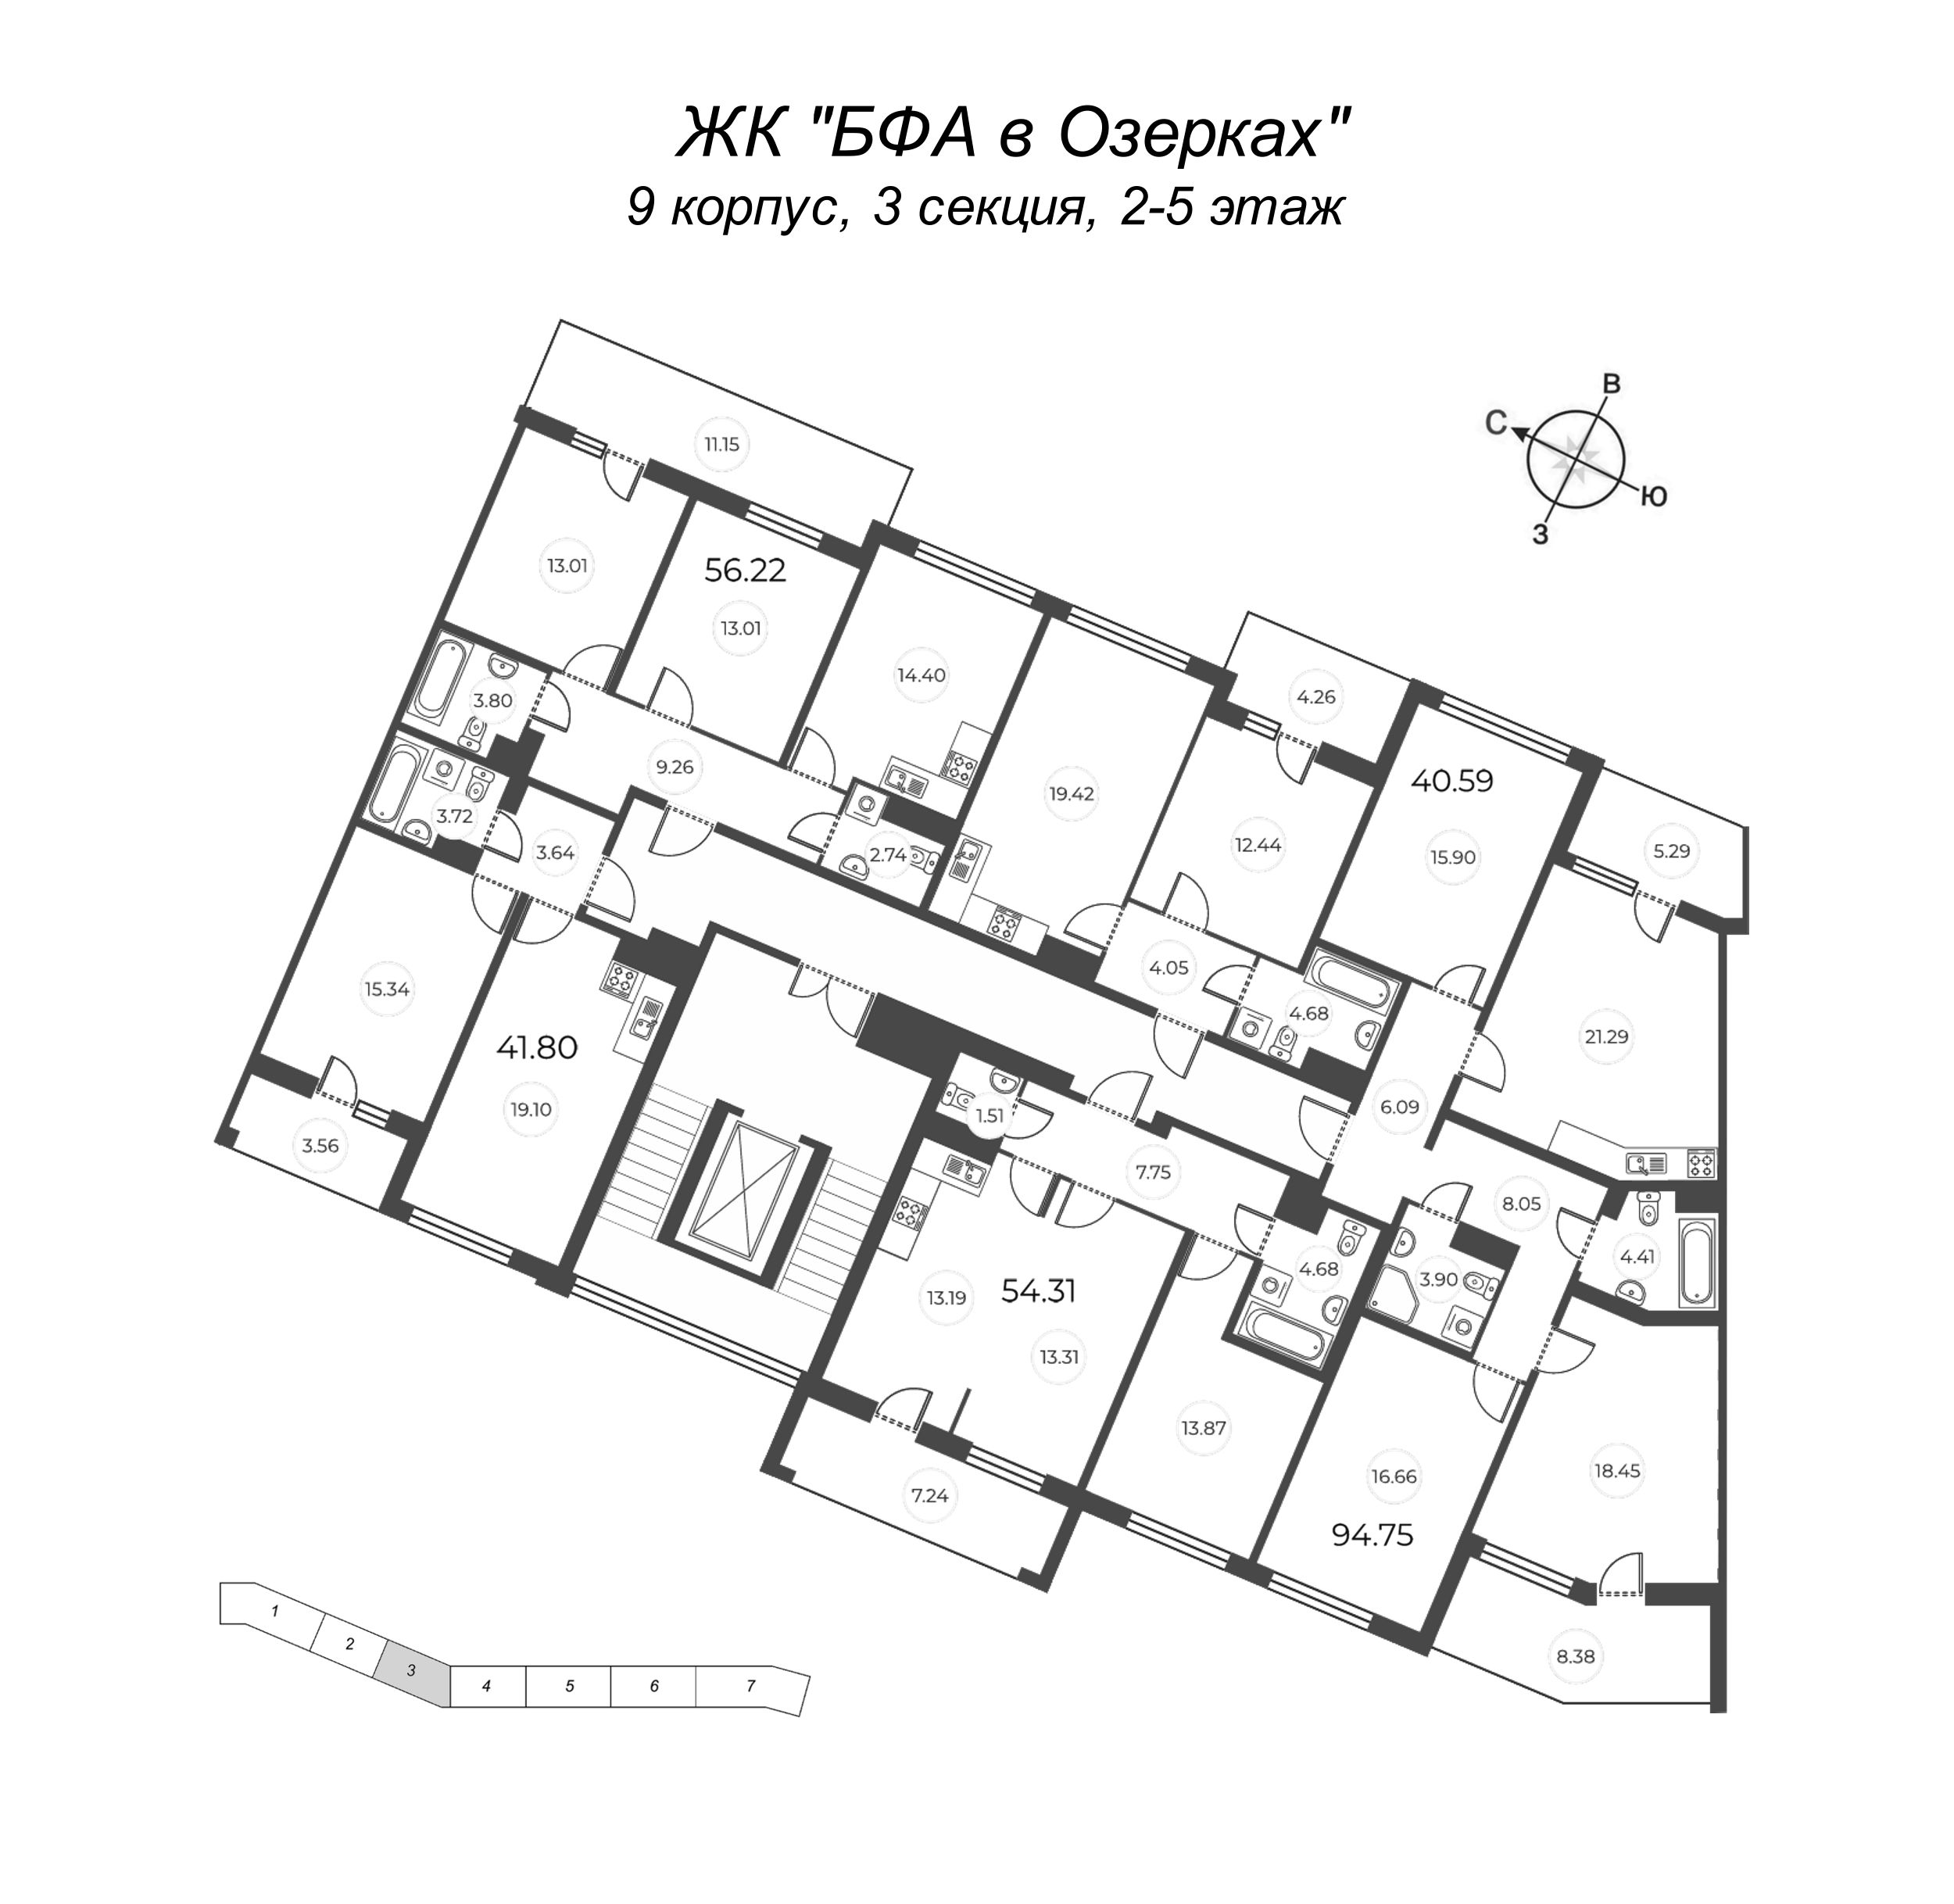 2-комнатная квартира, 59.57 м² в ЖК "БФА в Озерках" - планировка этажа